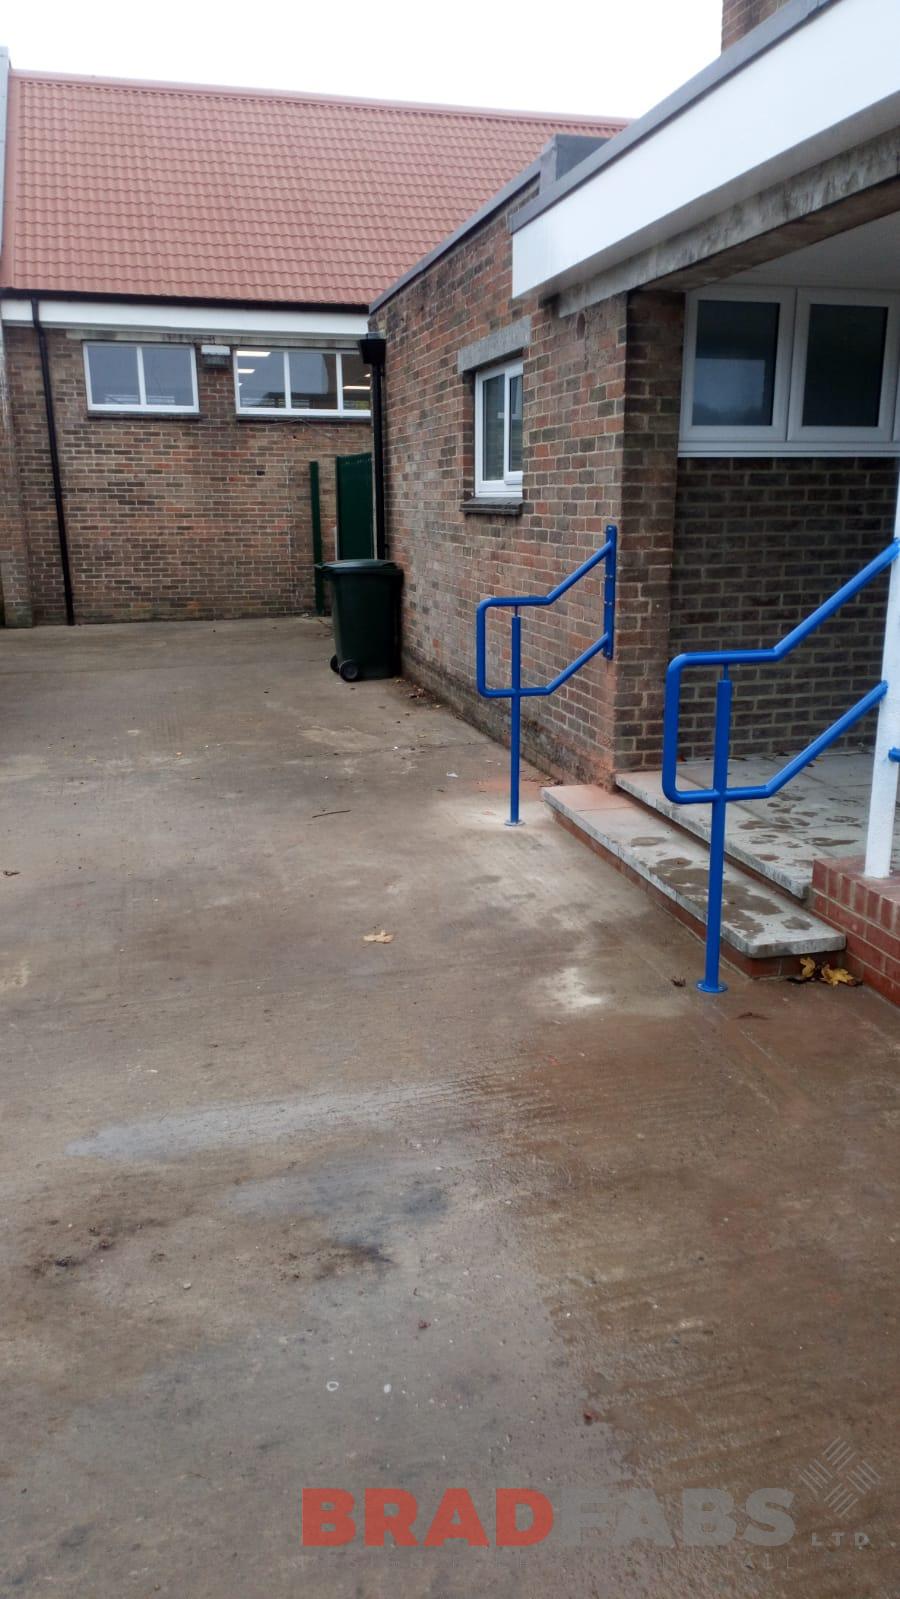 Mild steel, galvanised and powder coated railings for school by bradfabs